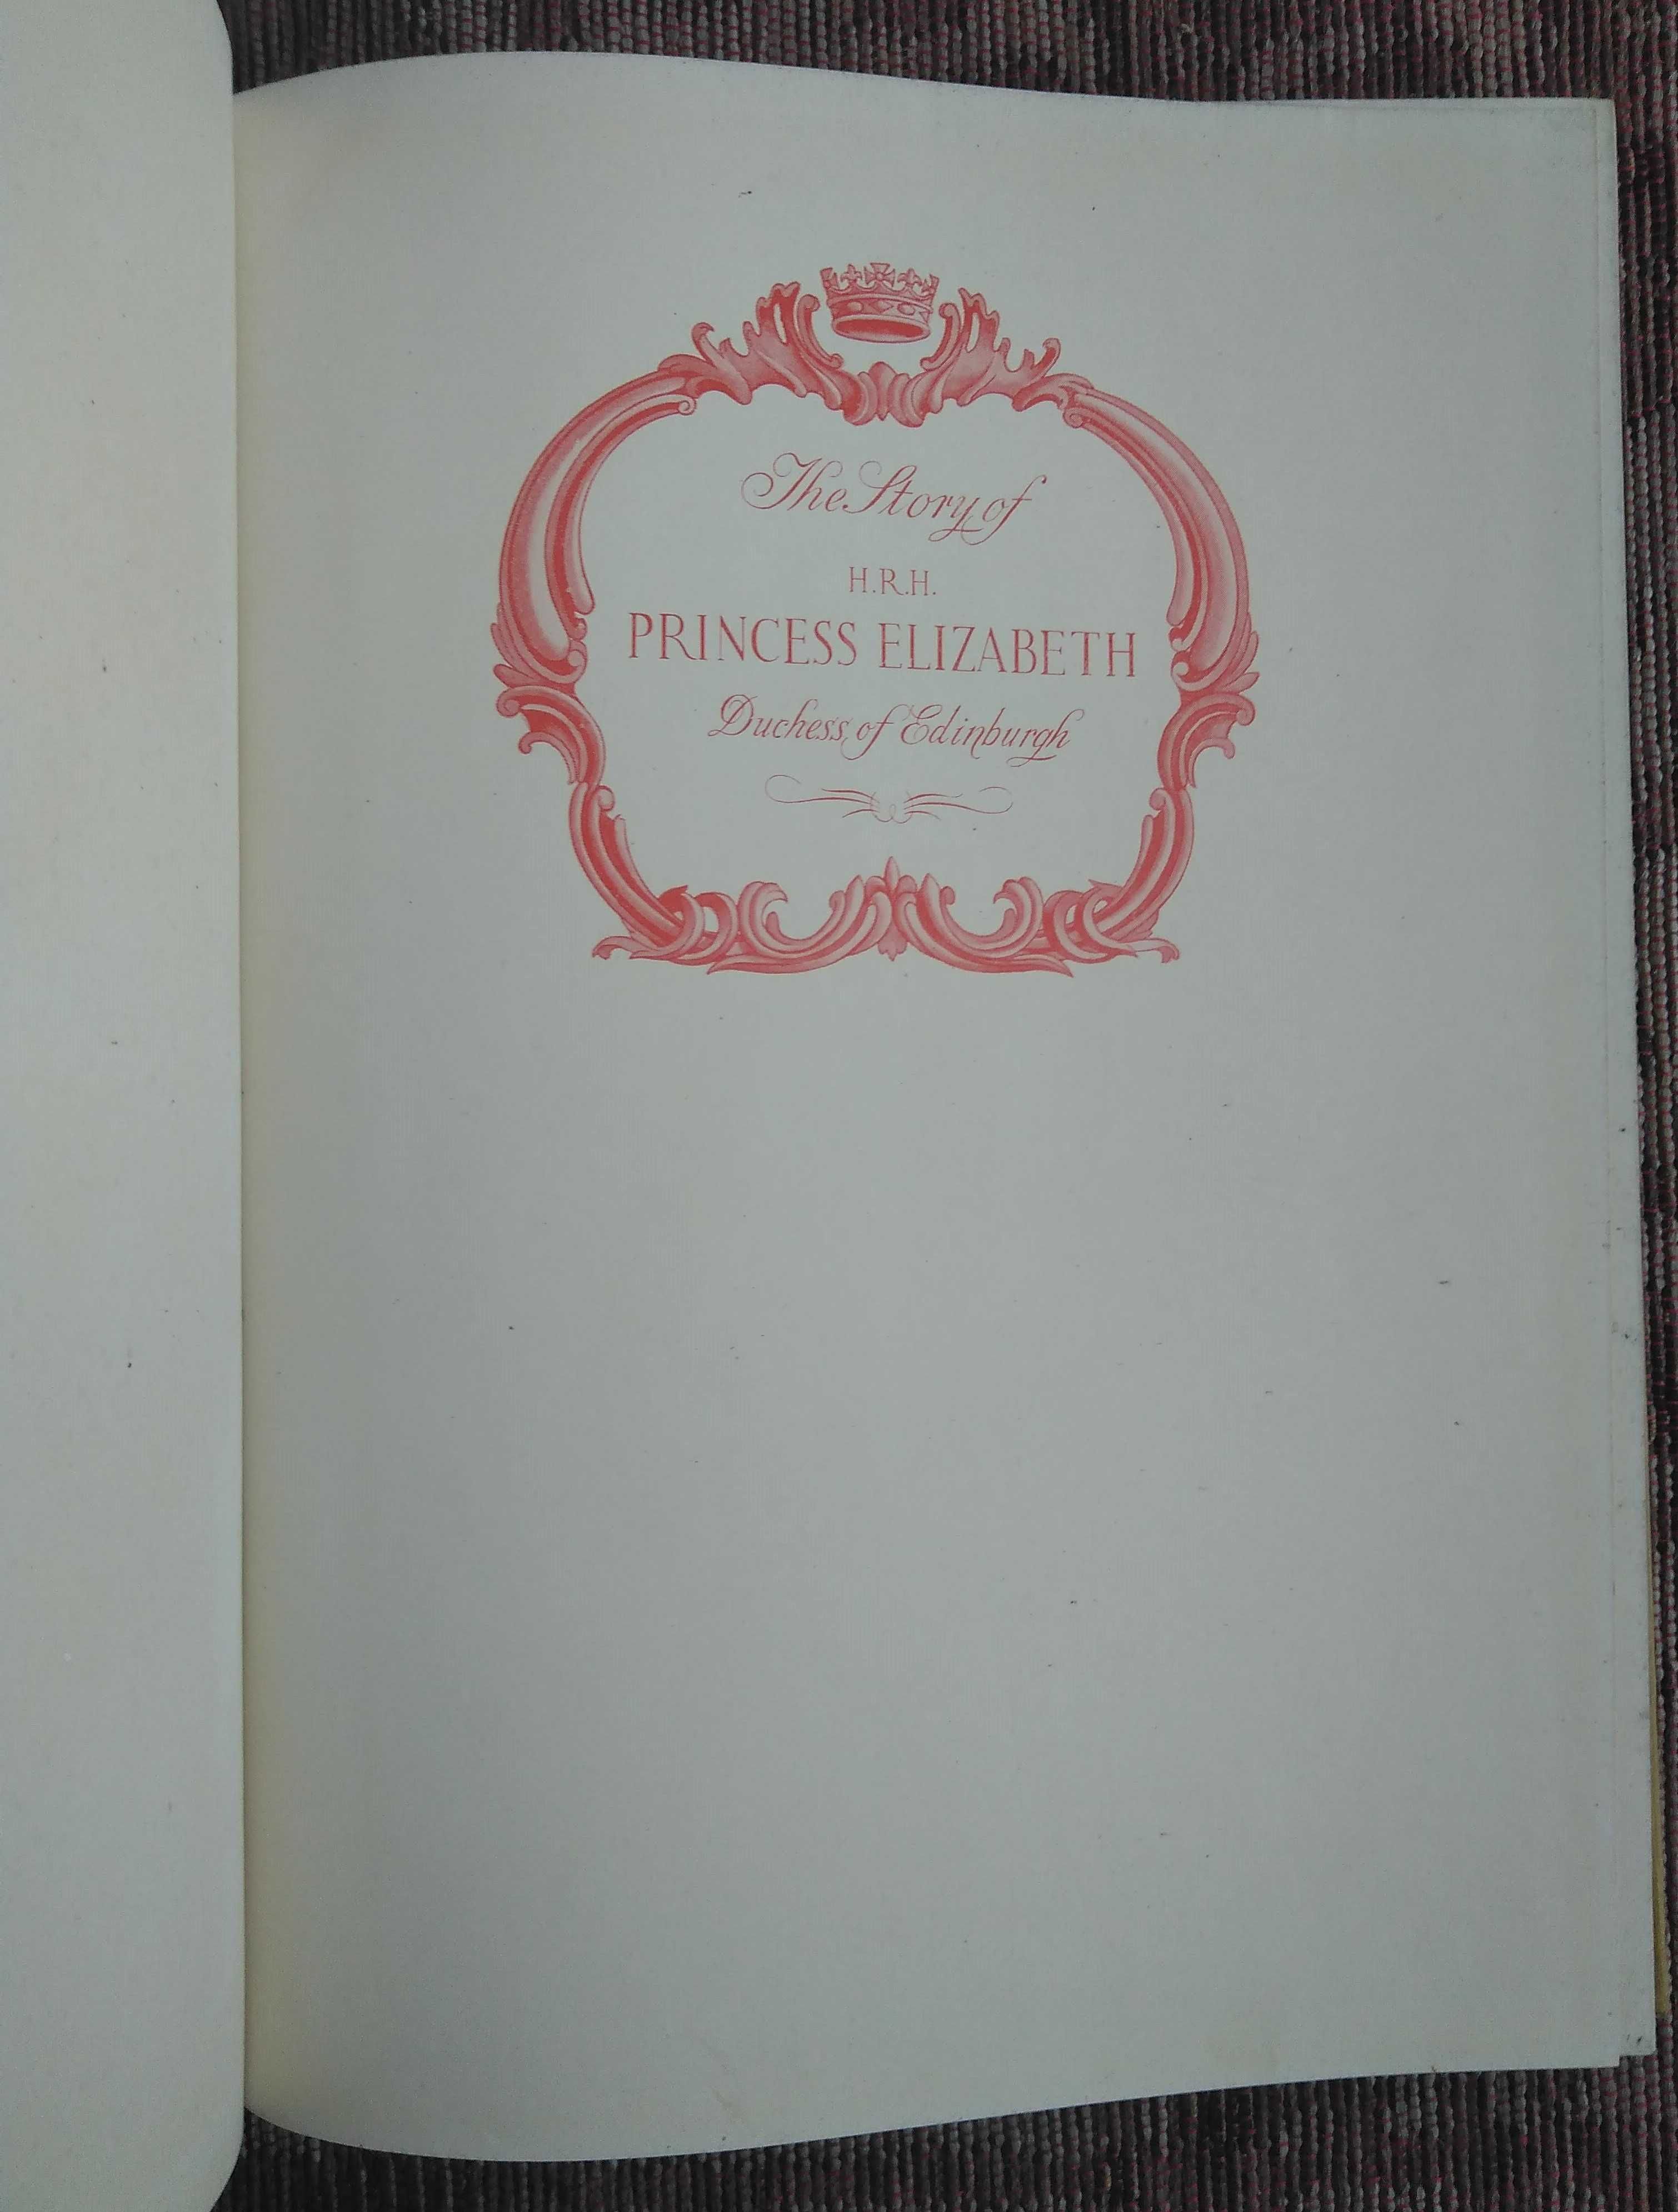 livro: The story of H.R.H. Princess Elisabeth, Duchess of Edimburgh...